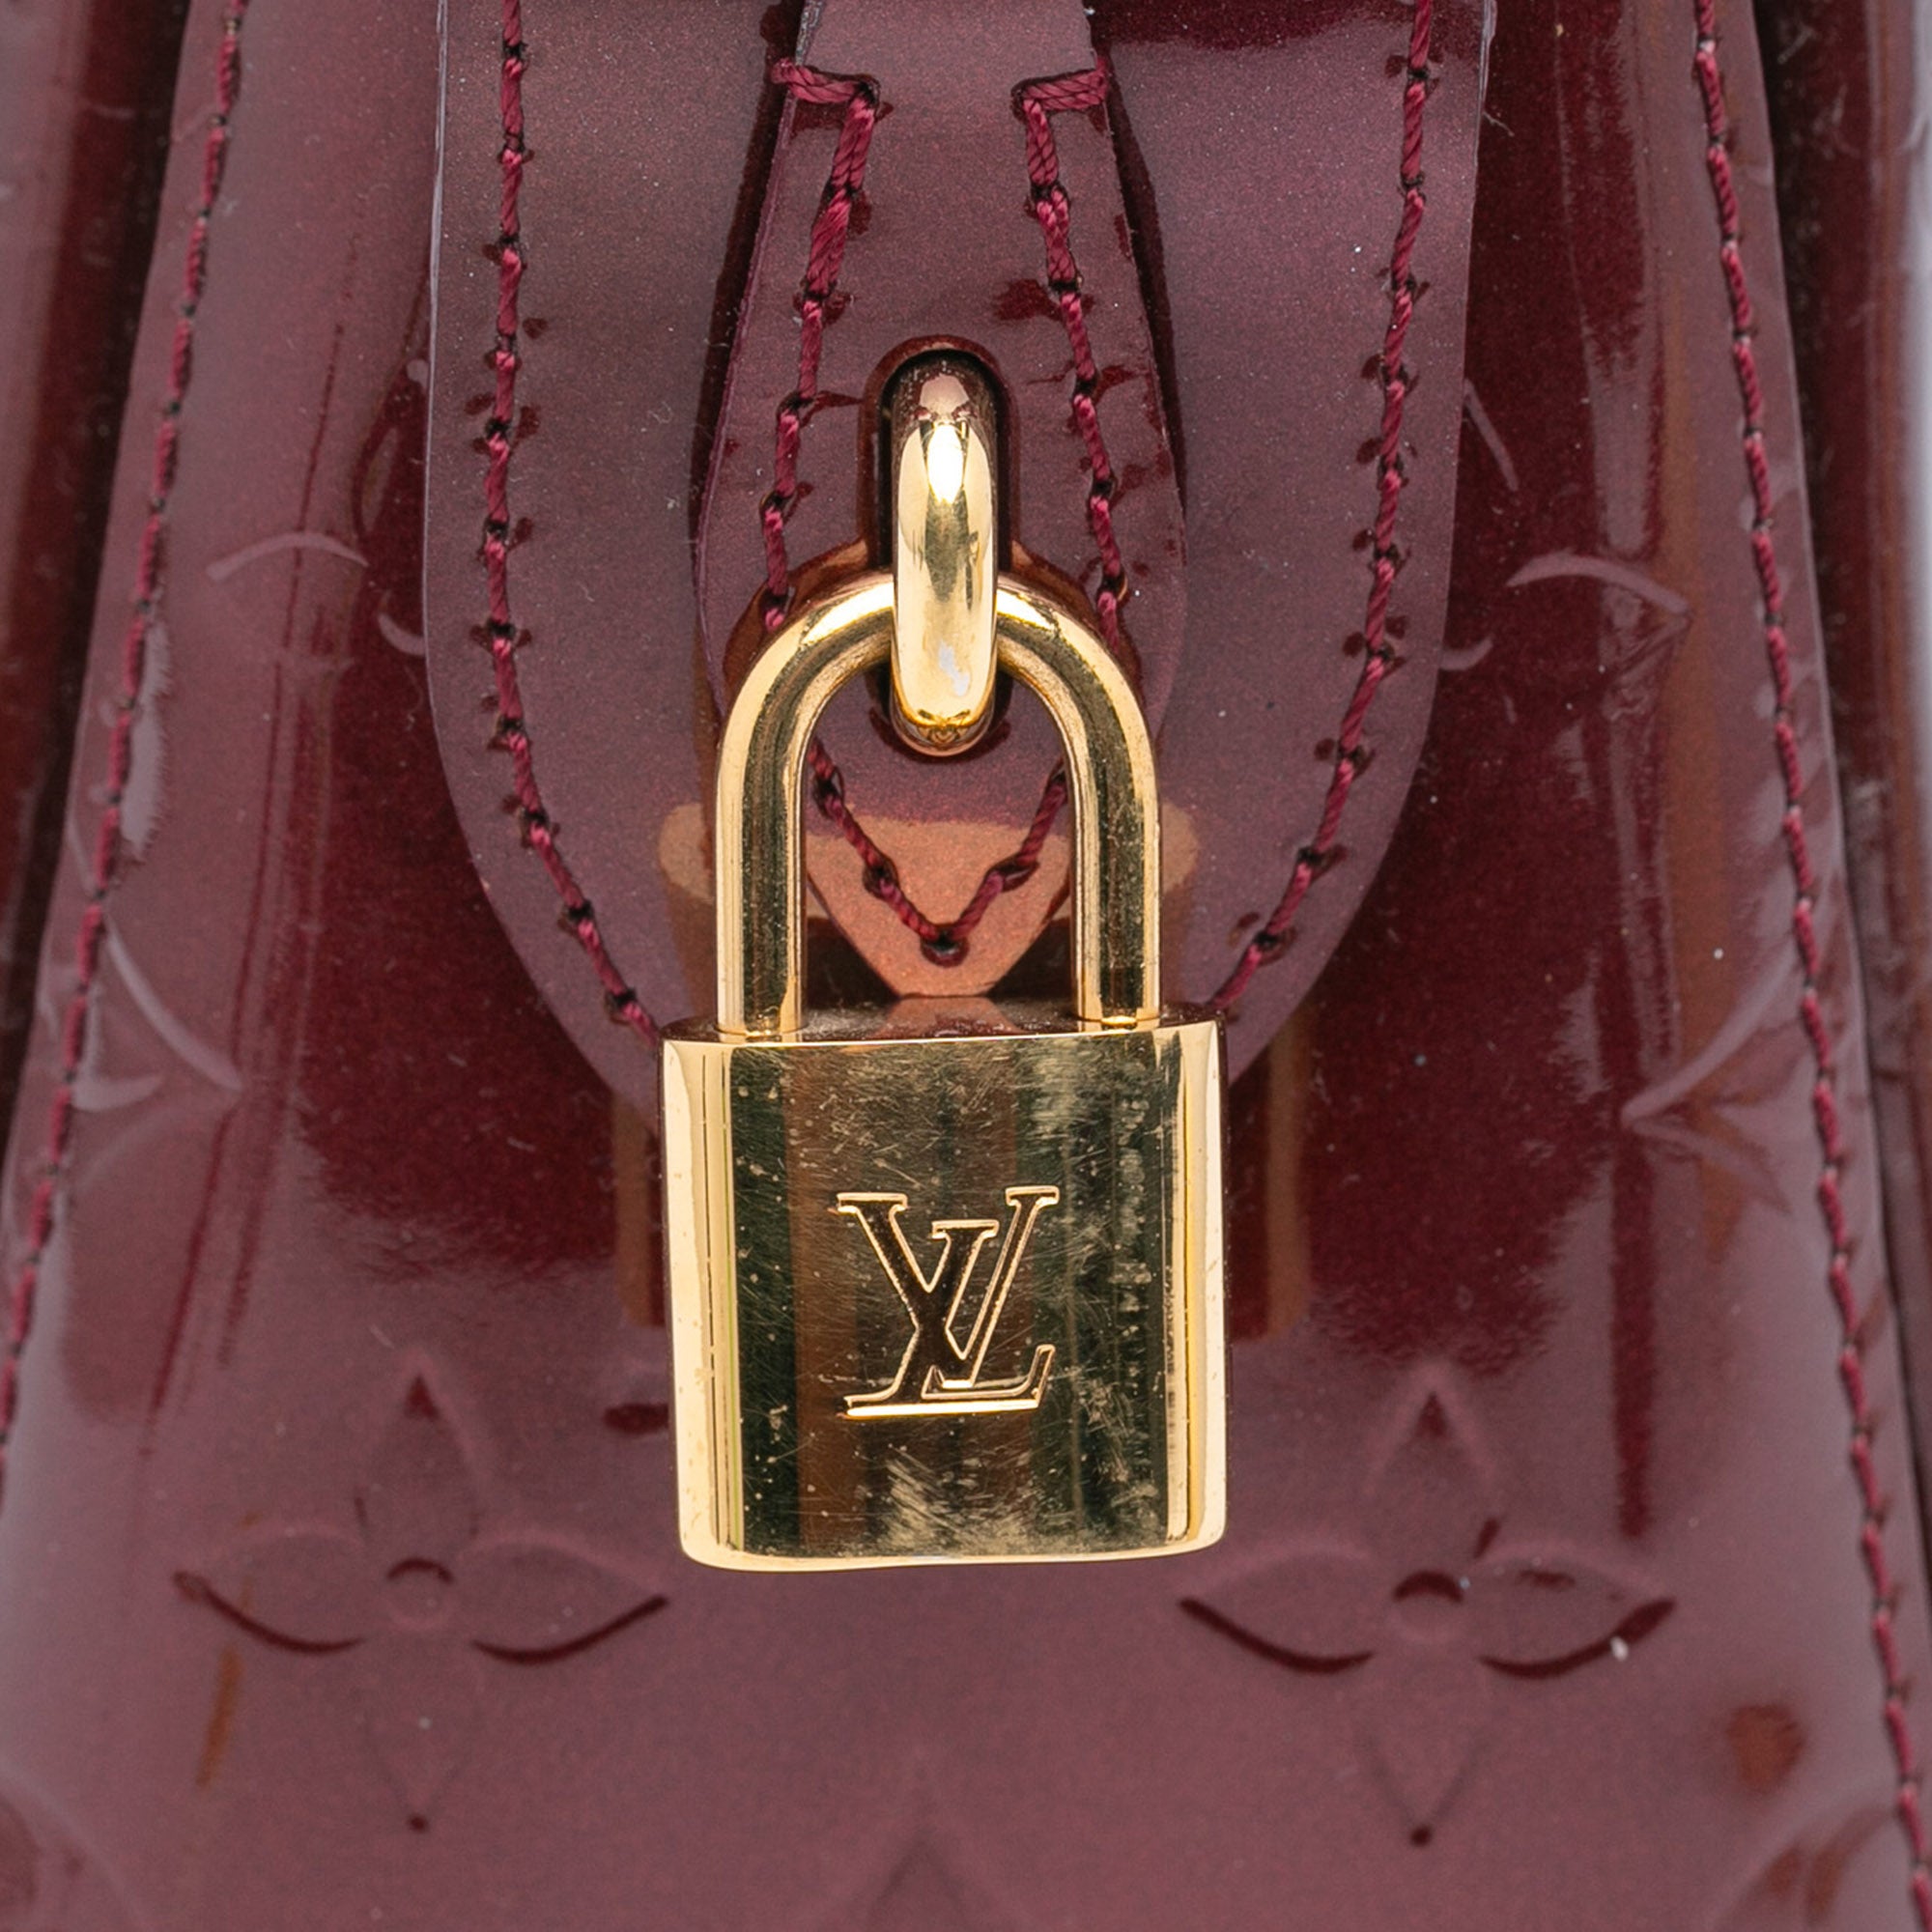 Louis Vuitton - Authenticated Sunset Boulevard Handbag - Patent Leather Burgundy Plain for Women, Very Good Condition